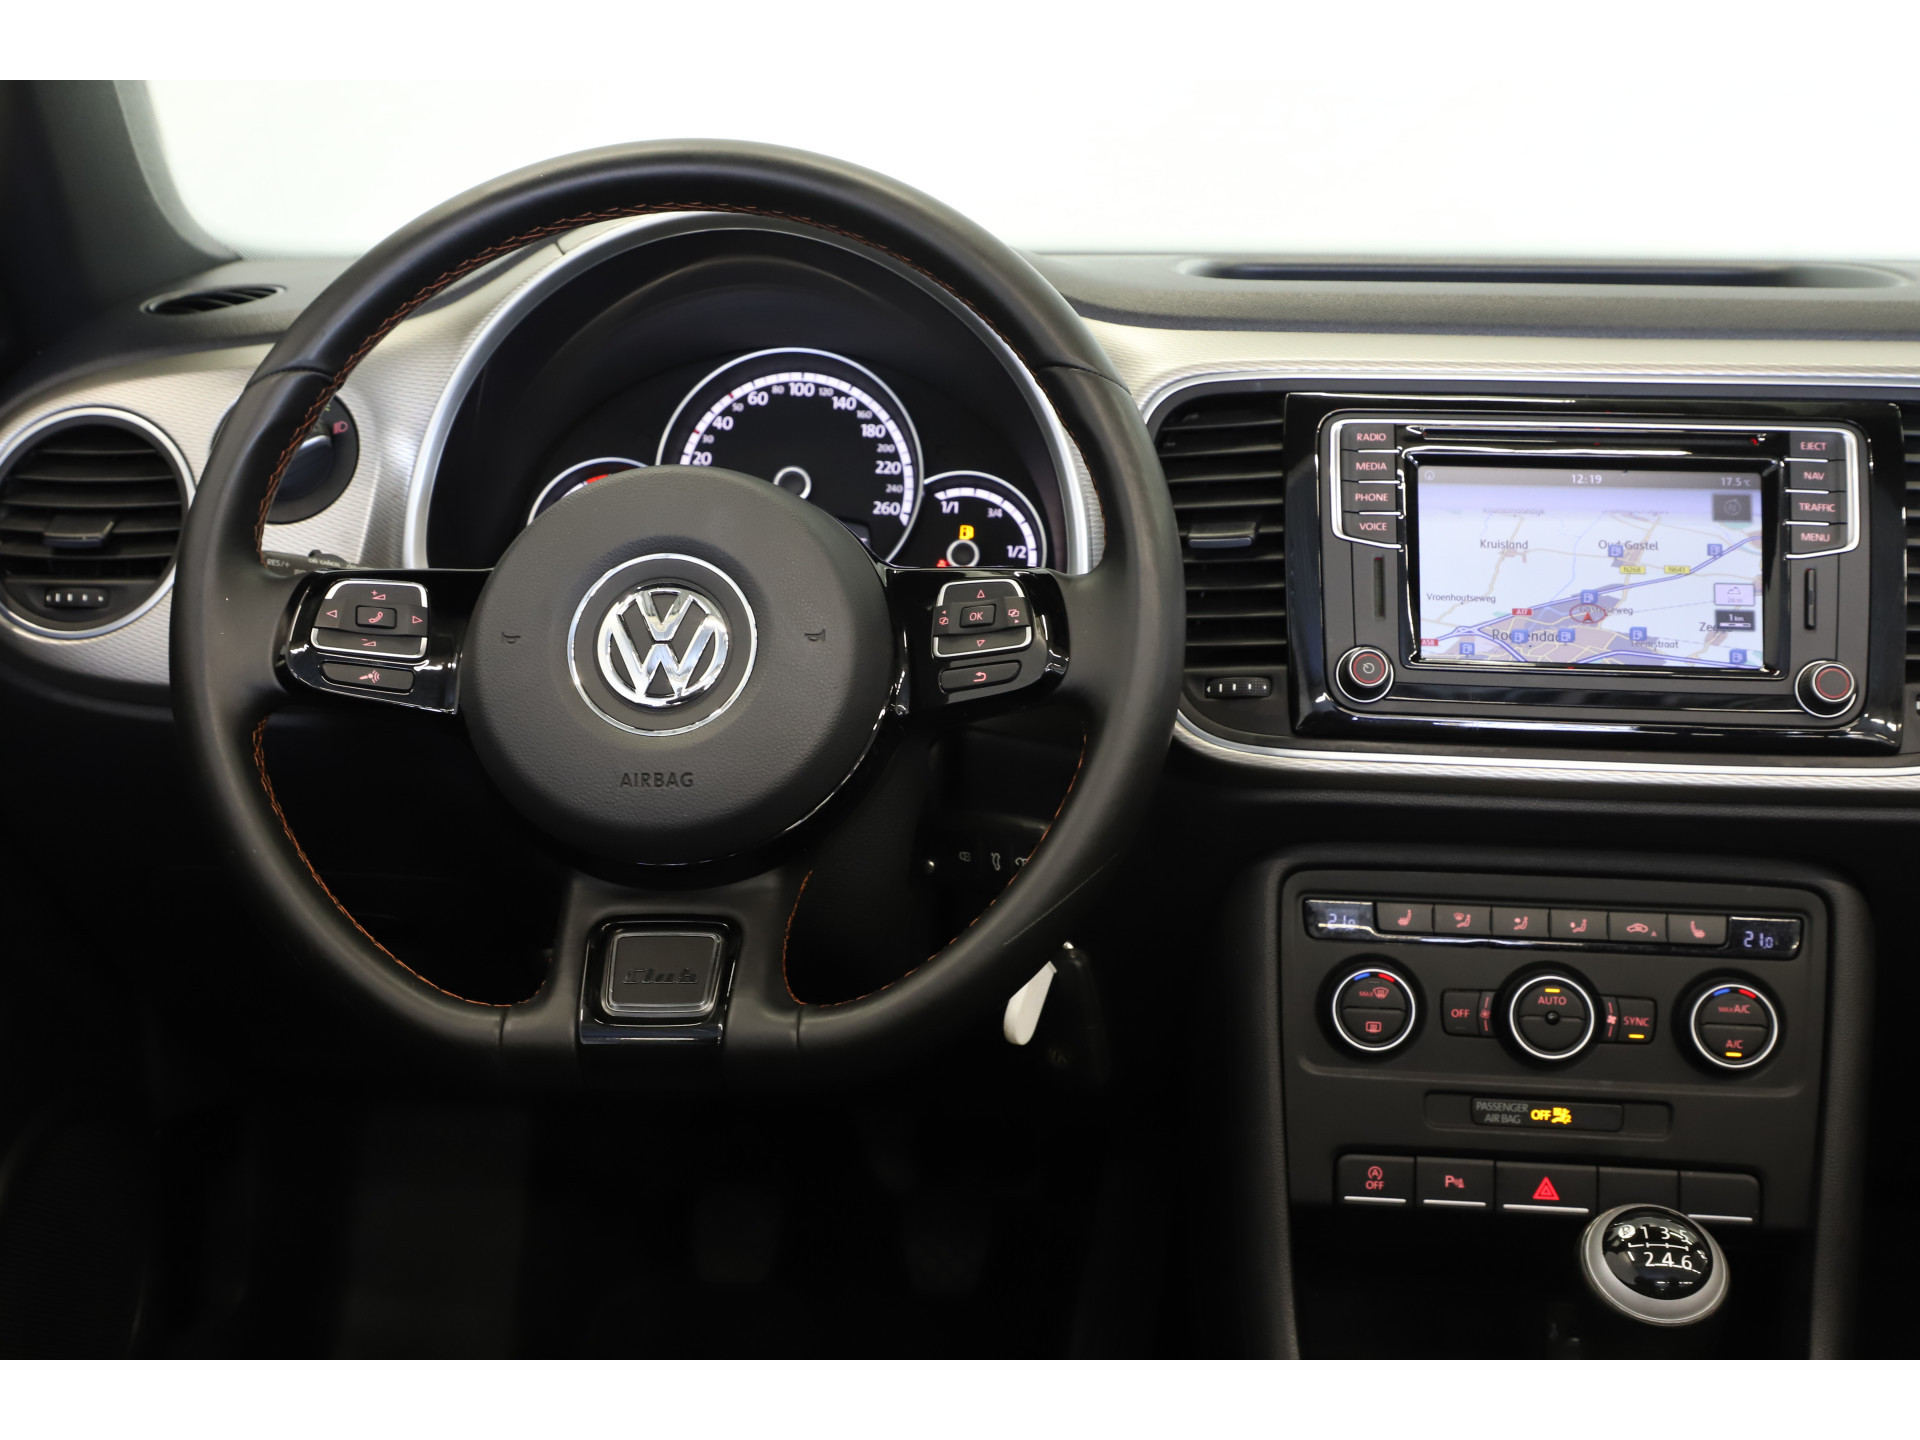 Volkswagen - Beetle Cabriolet 1.2 TSI 105pk Exclusive Series - 2016